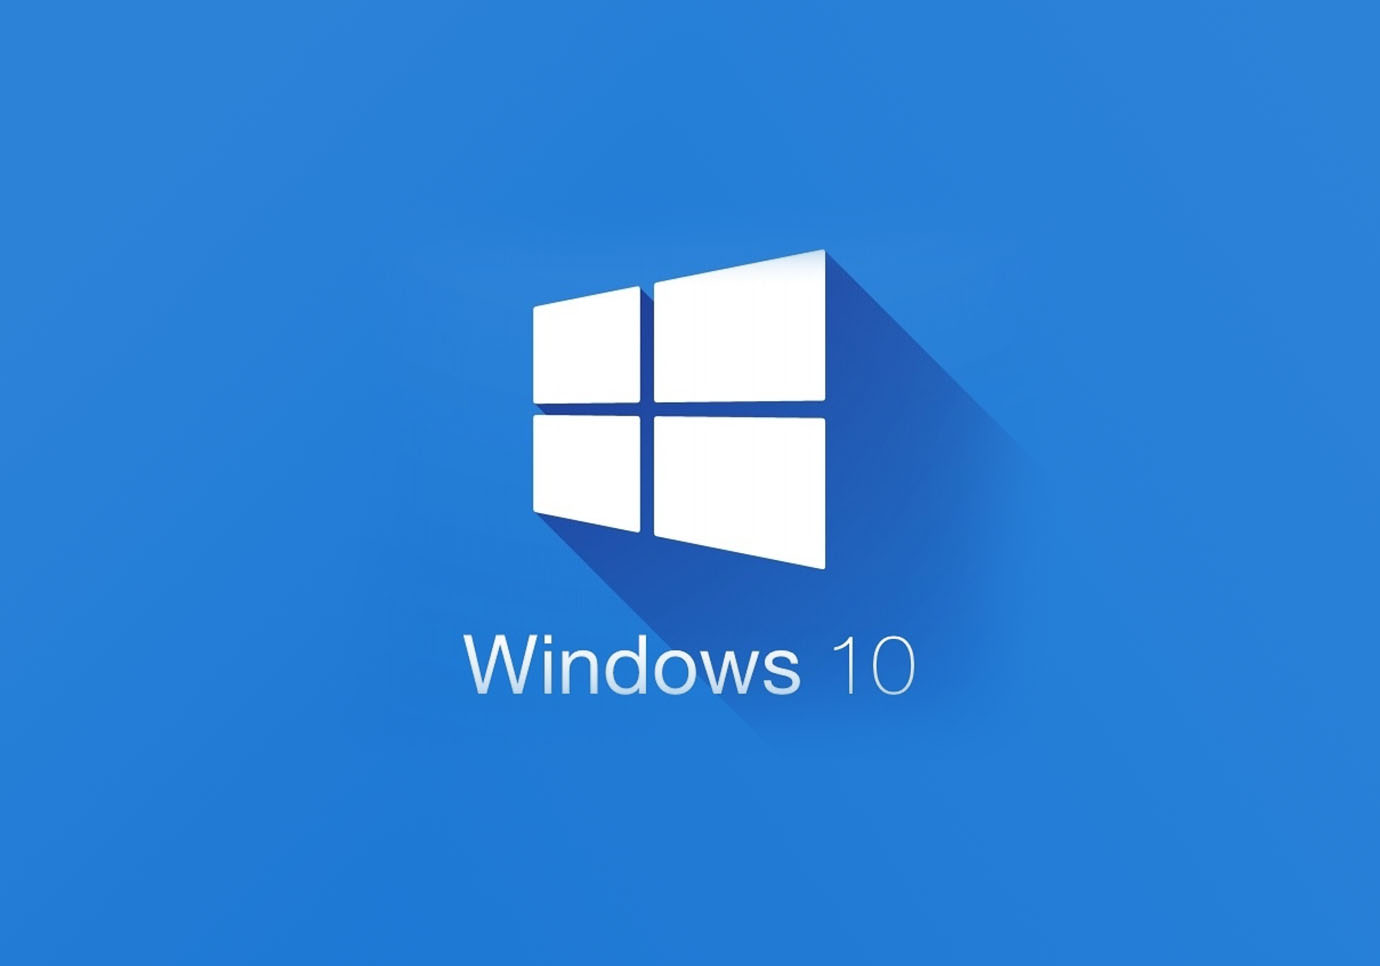 History of Microsoft Windows Versions & Logo Design to Windows 10